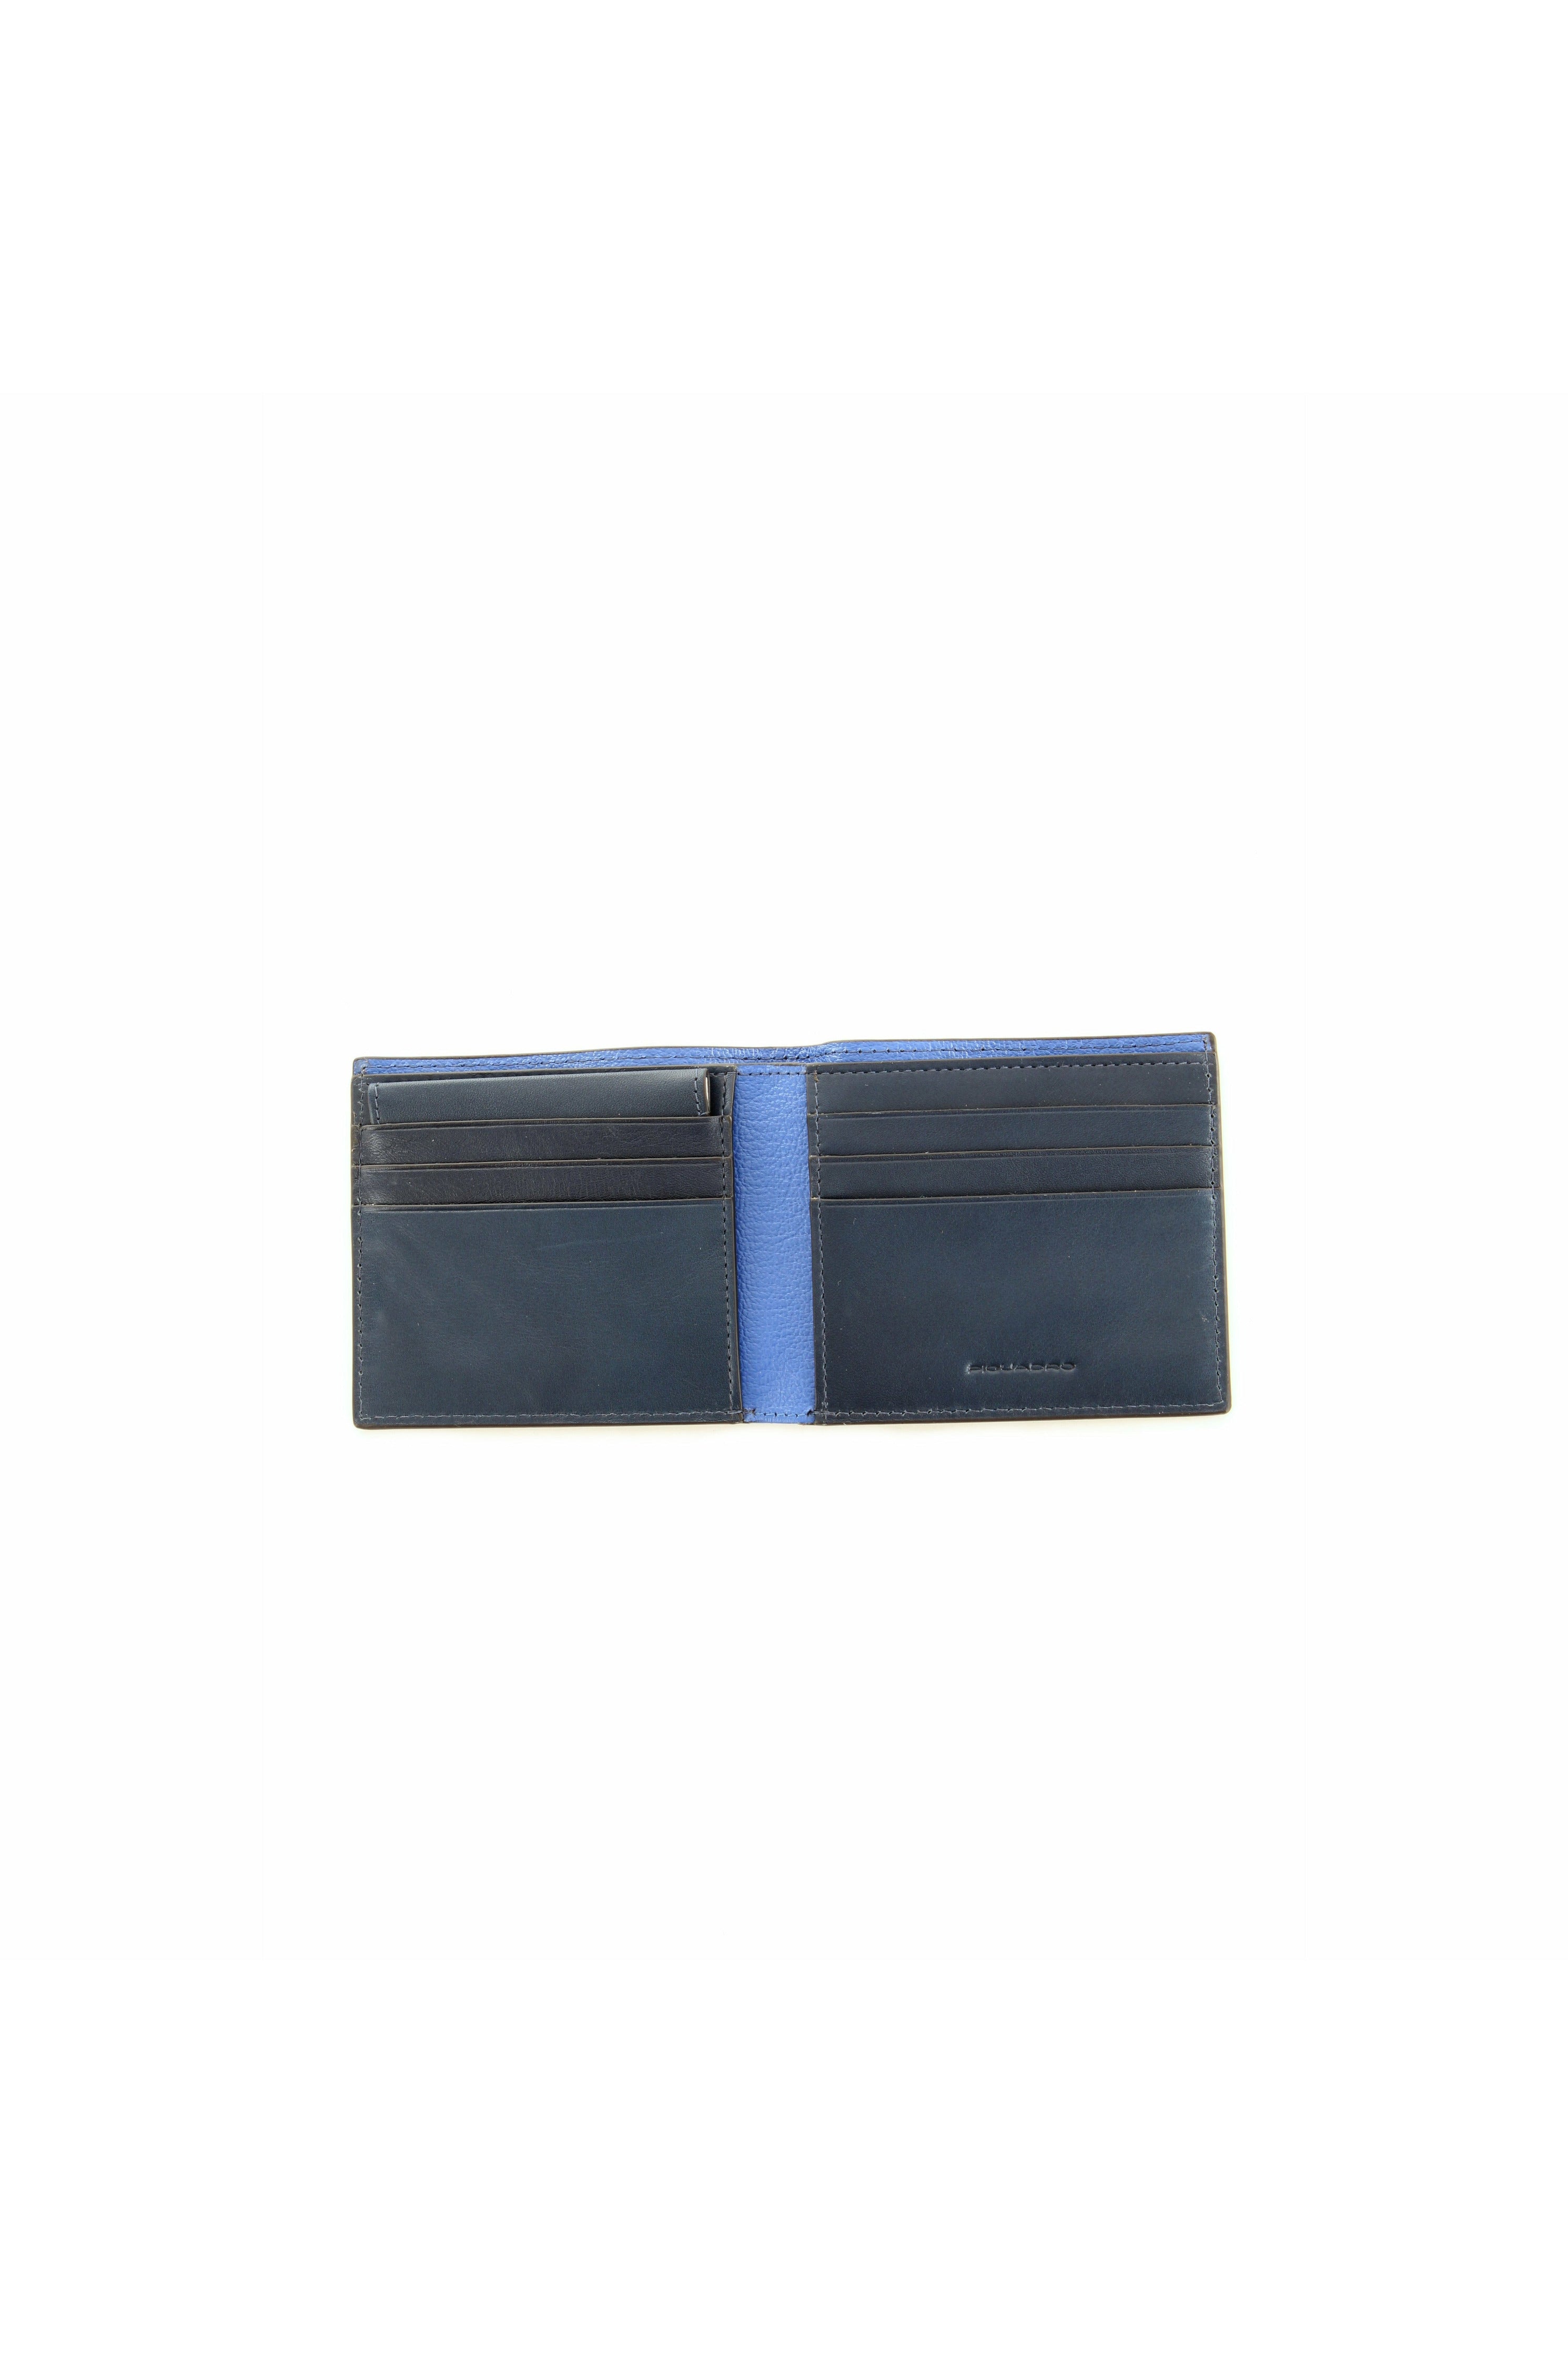 PiQuadro PU3891BOR portafoglio in pelle liscia con logo